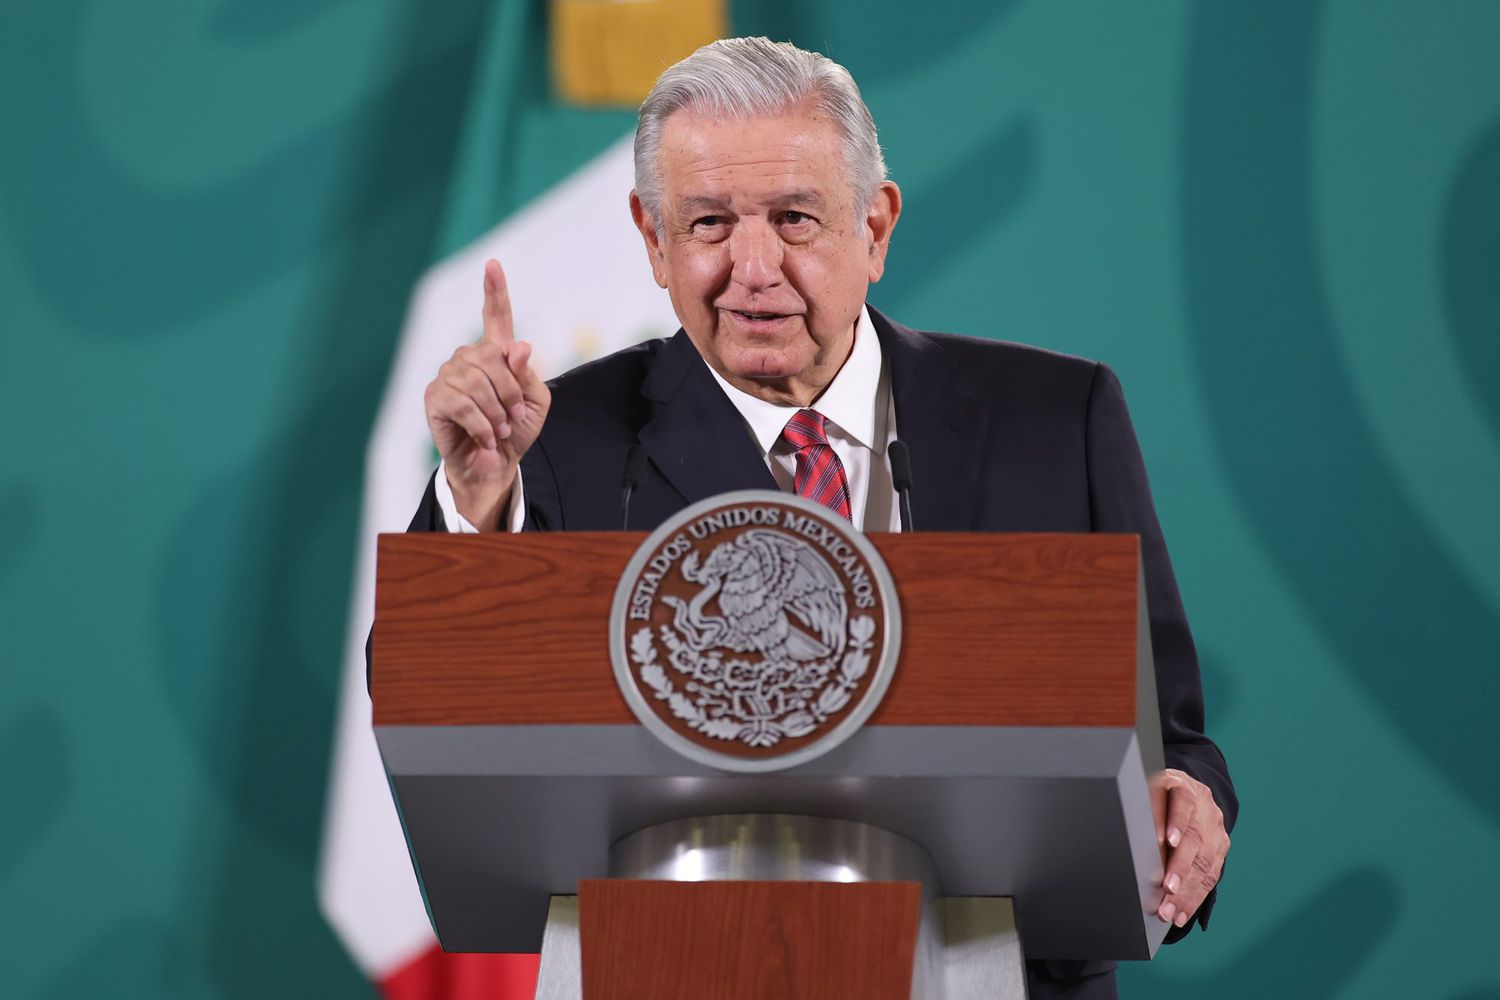 Manuel Lopez Obrador